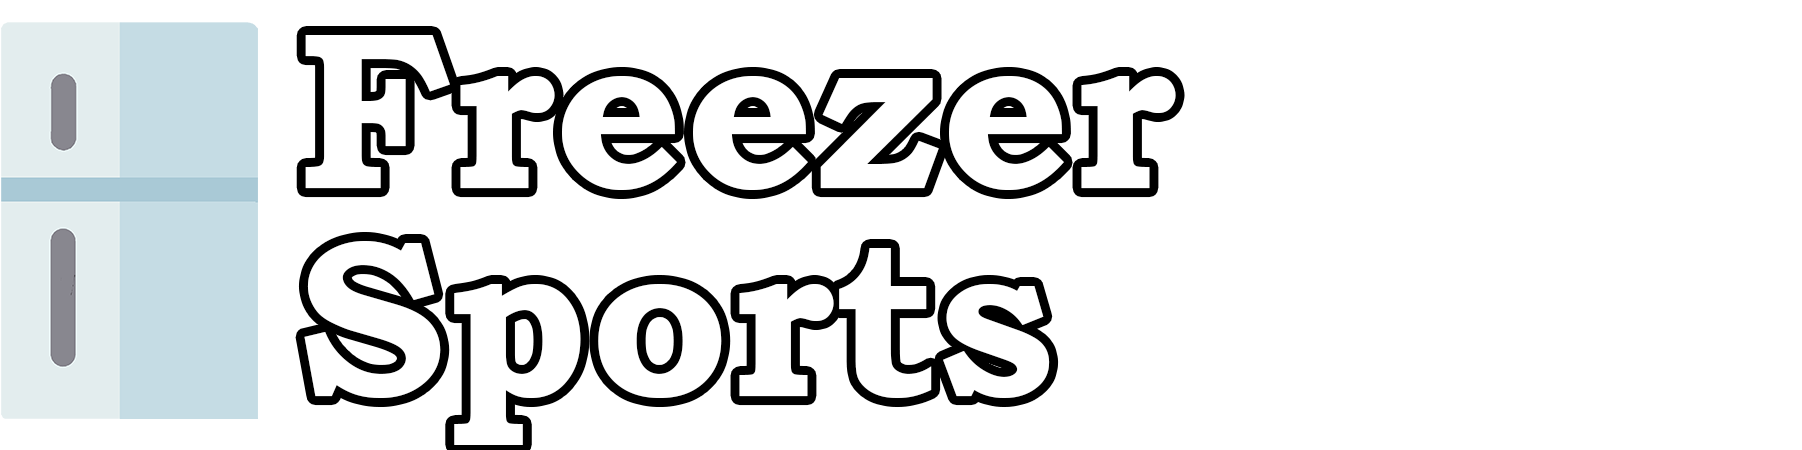 FreezerSports